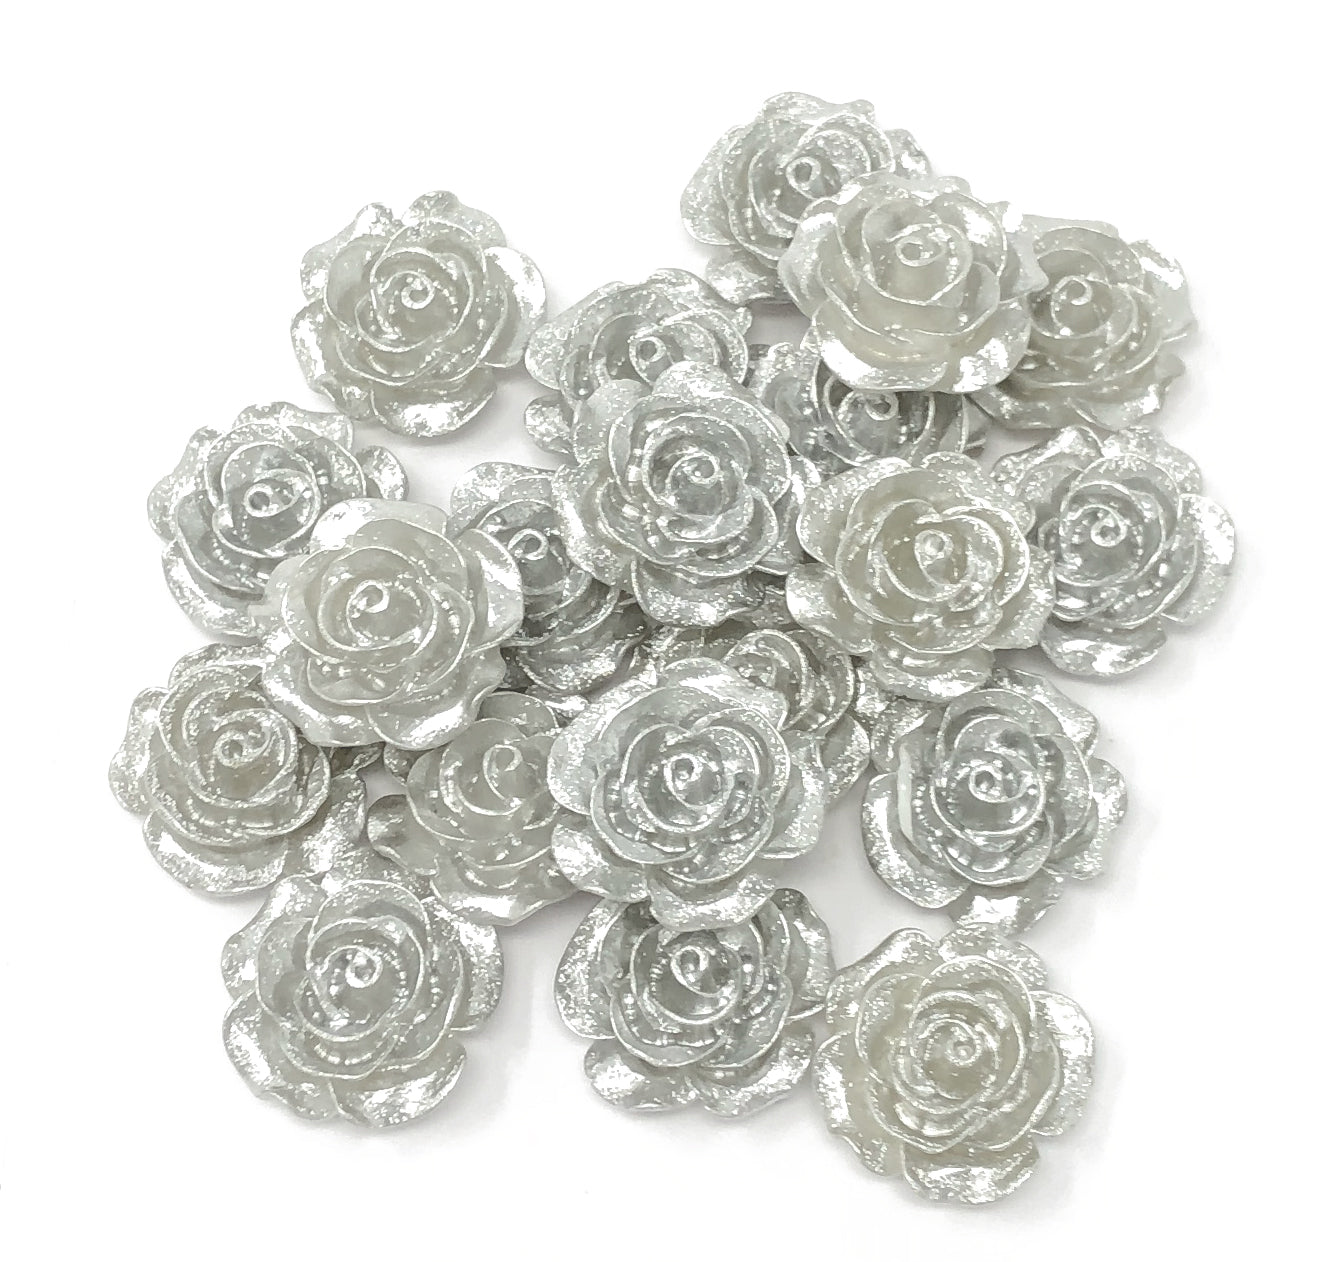 Silver 20mm Resin Roses Flatbacks - Pack of 20